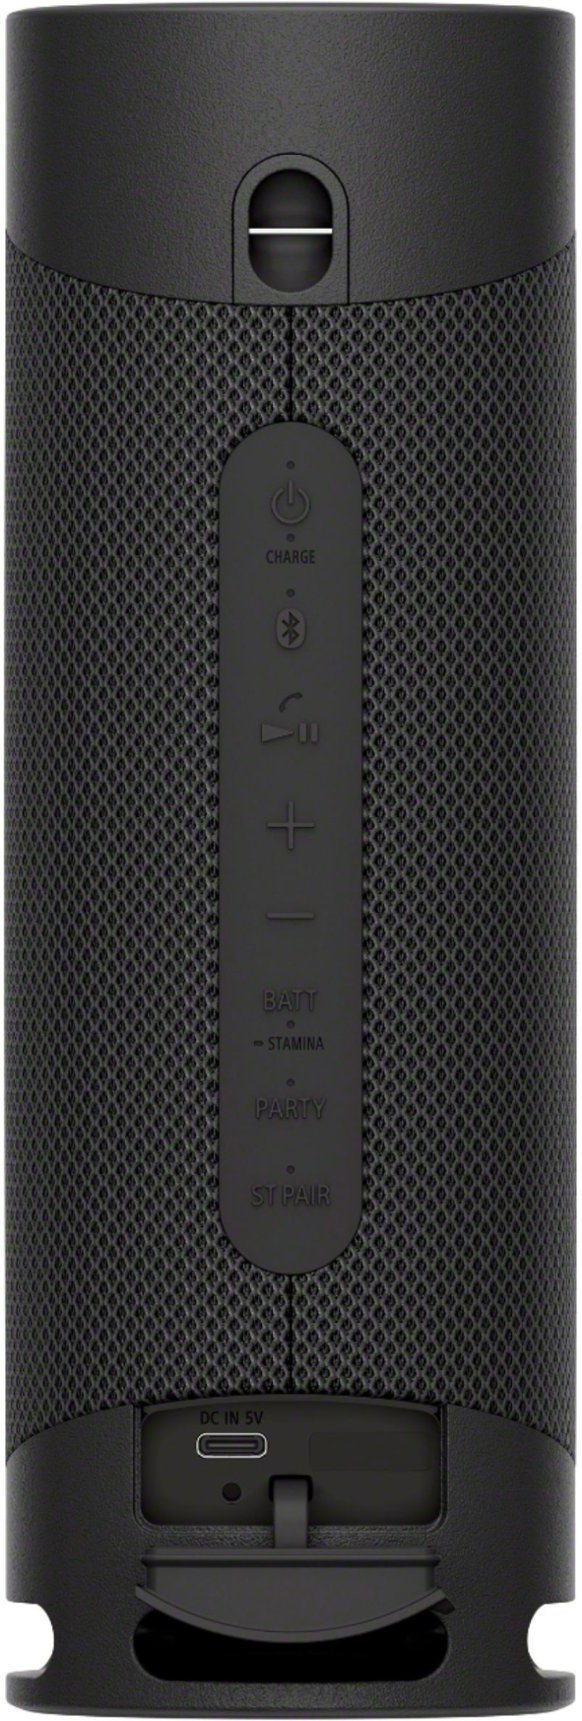 Sony Extra Bass Wireless Waterproof Portable Bluetooth Speaker - Black (Refurbished)